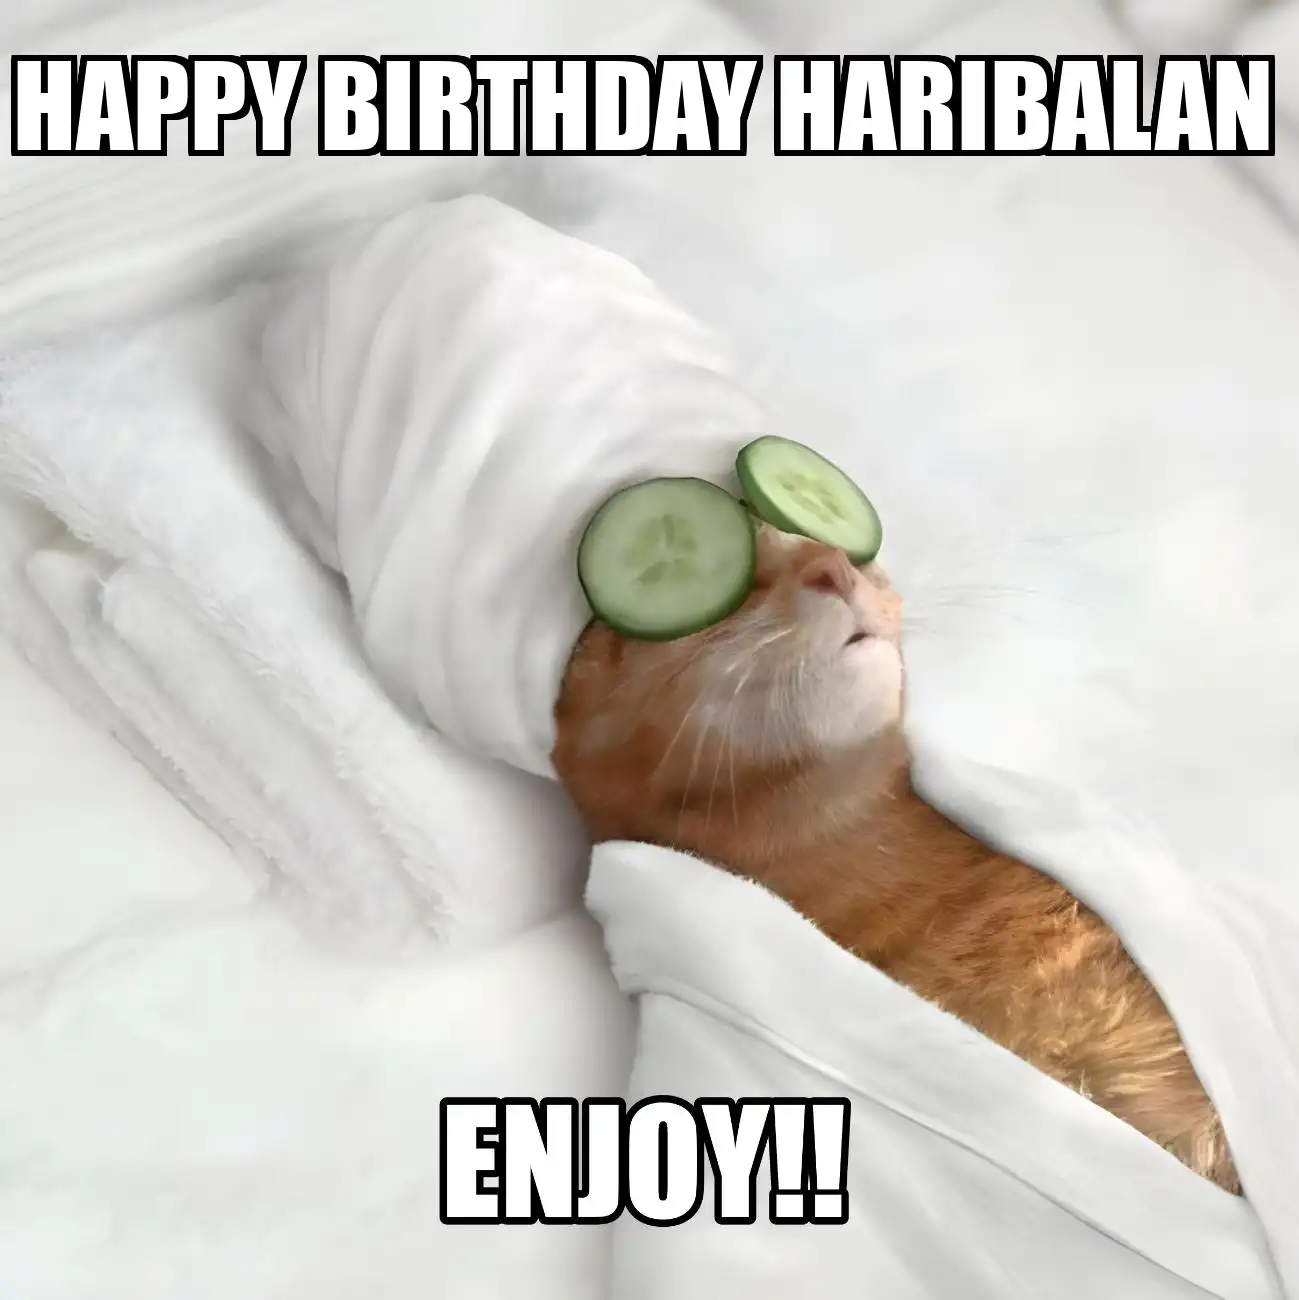 Happy Birthday Haribalan Enjoy Cat Meme